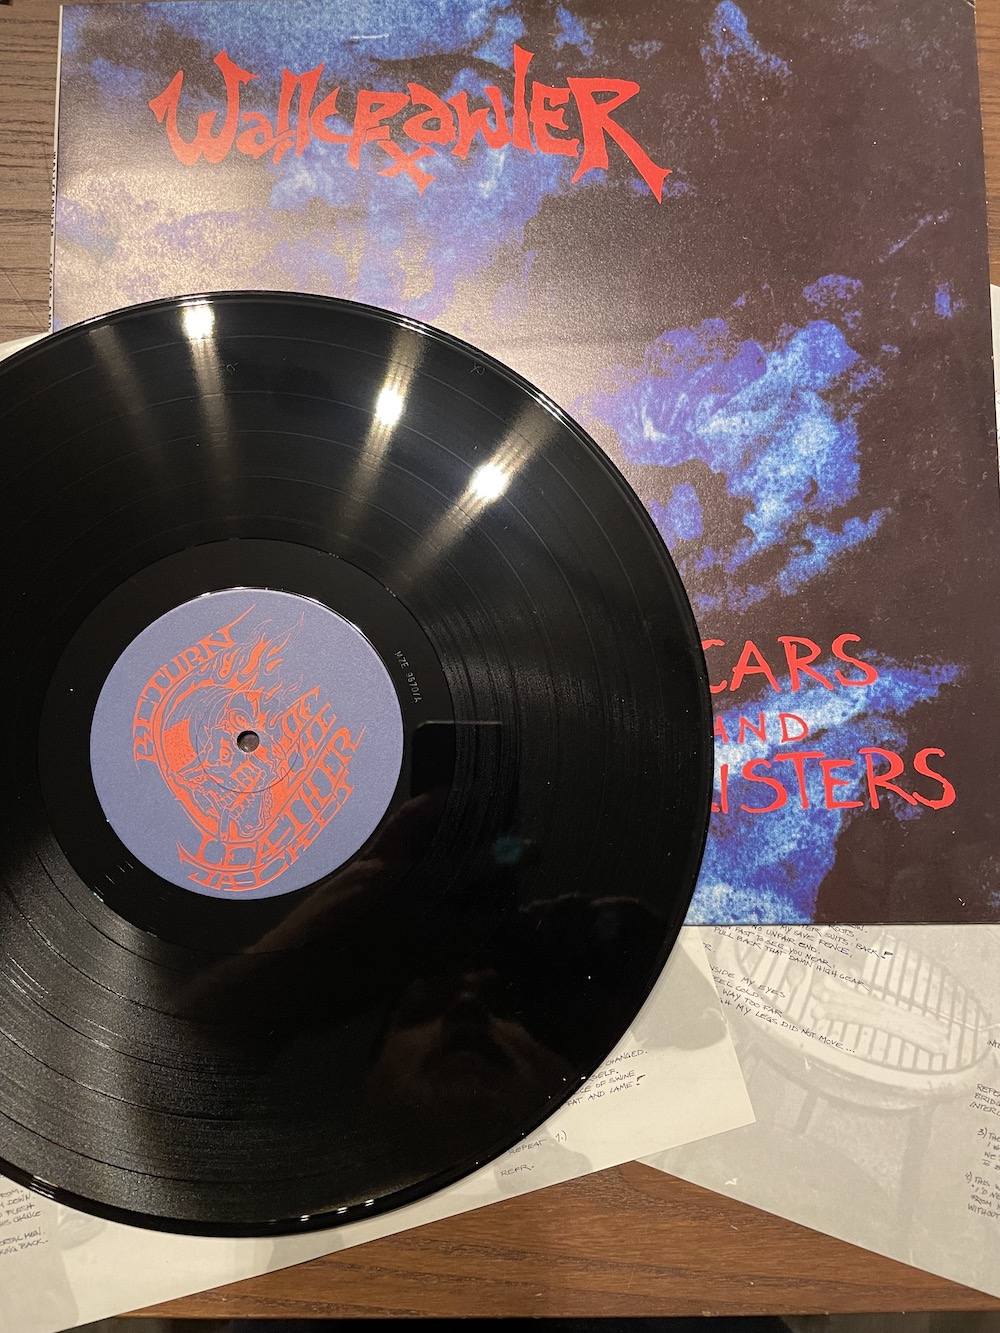 Wallcrawler - Scars And Blisters Vinyl LP